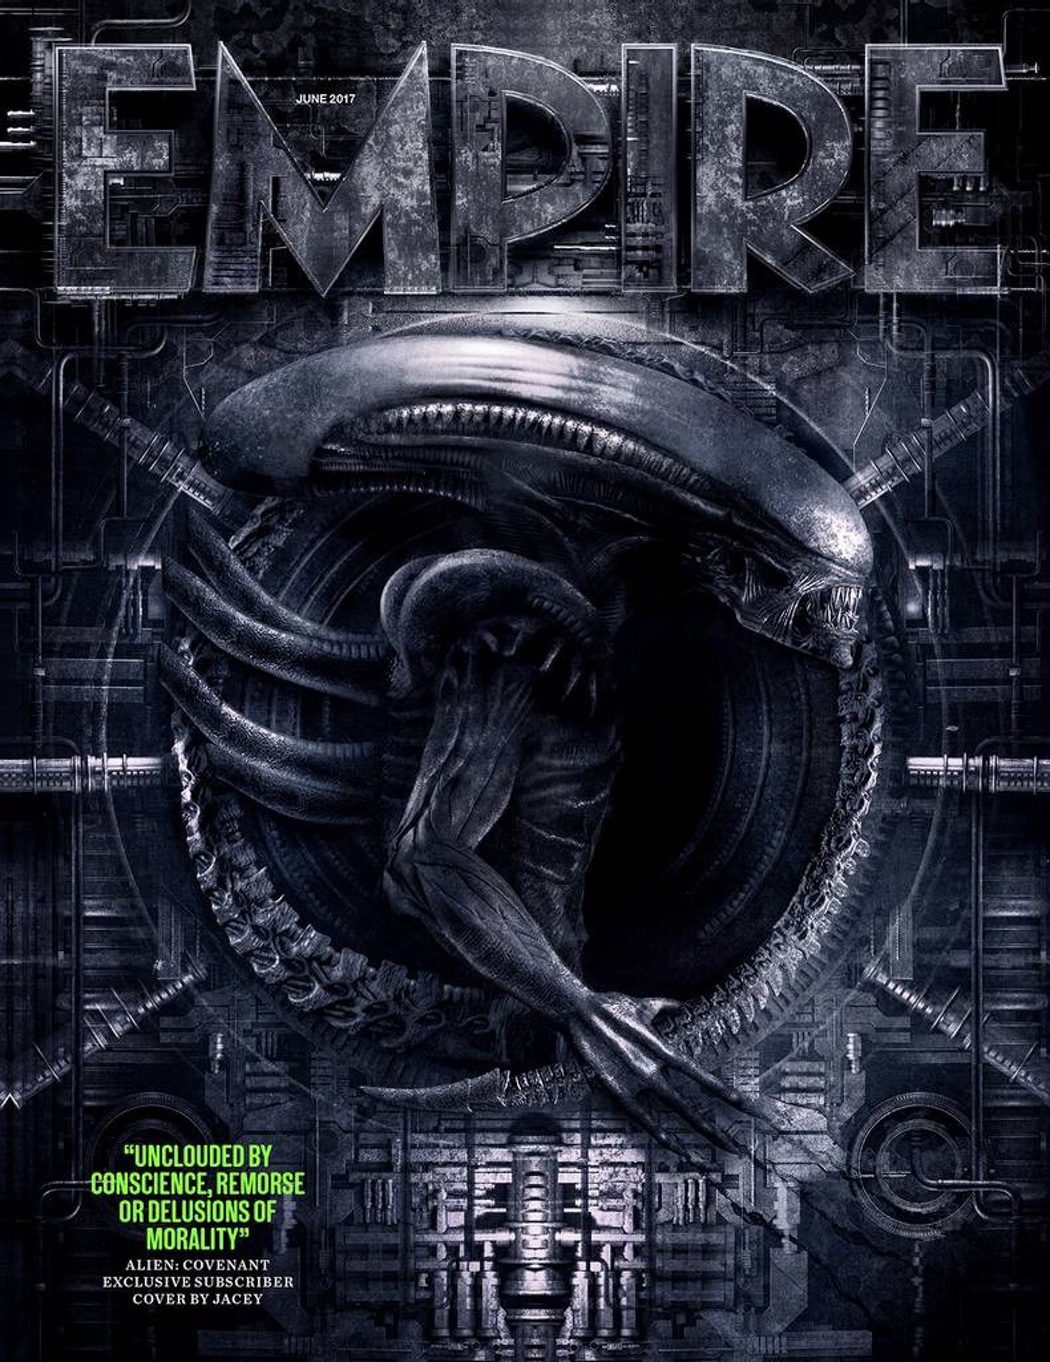 Espectacular diseño del Xenomorfo para 'Alien: Covenant'